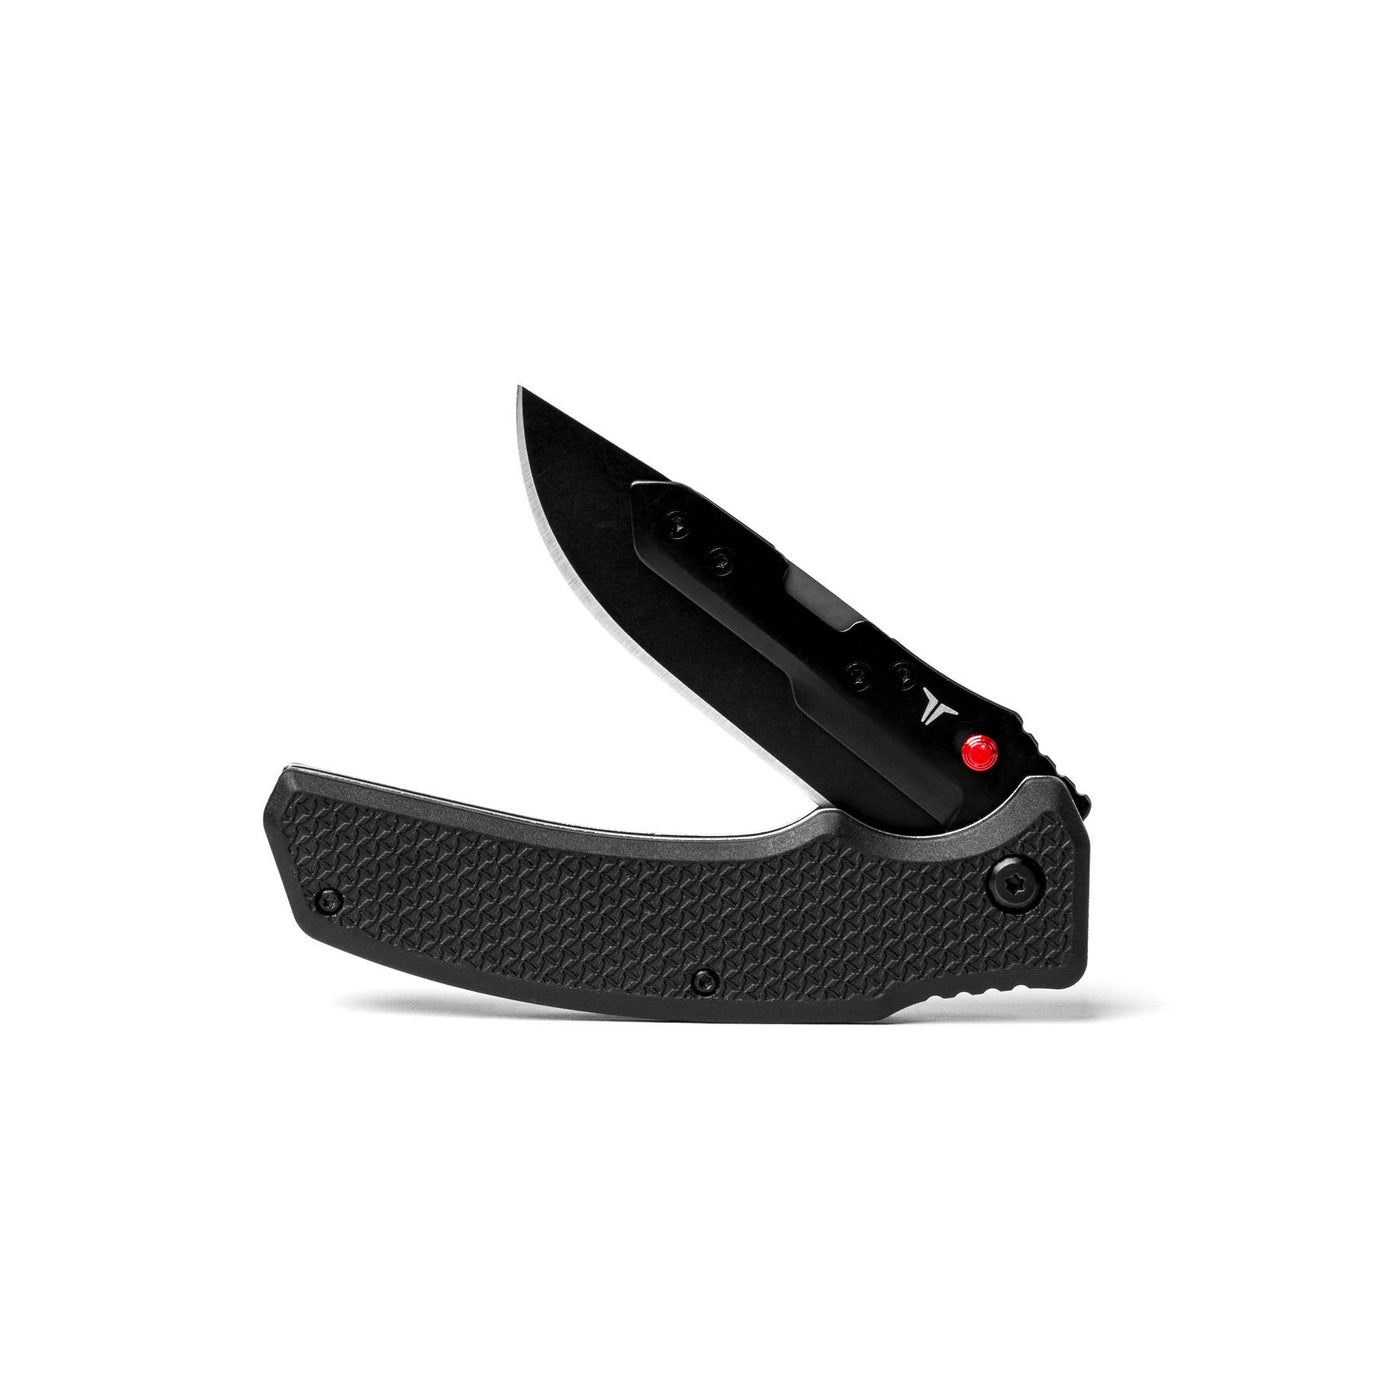 TRUE Replaceable Blade Knife-KNIFE-Kevin's Fine Outdoor Gear & Apparel